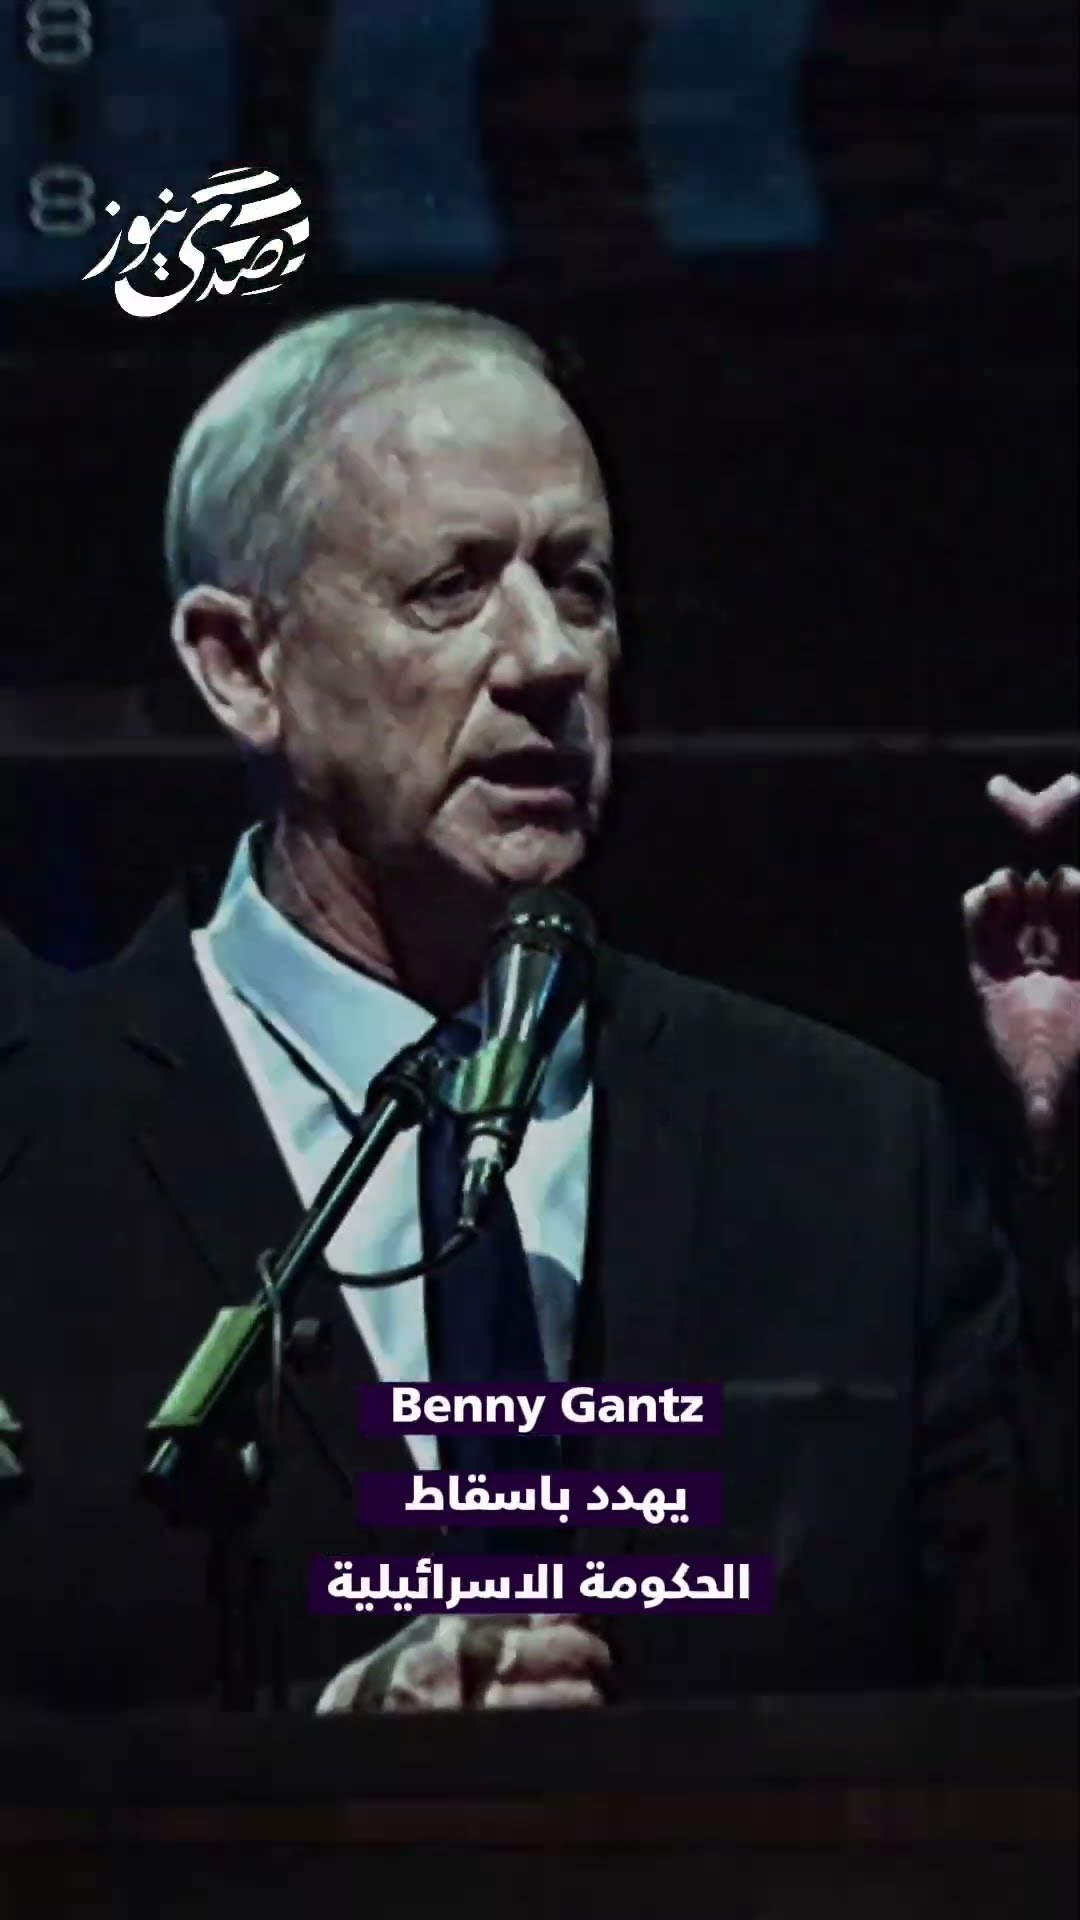 Benny Gantz يهدد بإسقاط الحكومة الإسرائيلية إن عارضت "مقترحا جيدا لصفقة تبادل لا ينهي الحرب"